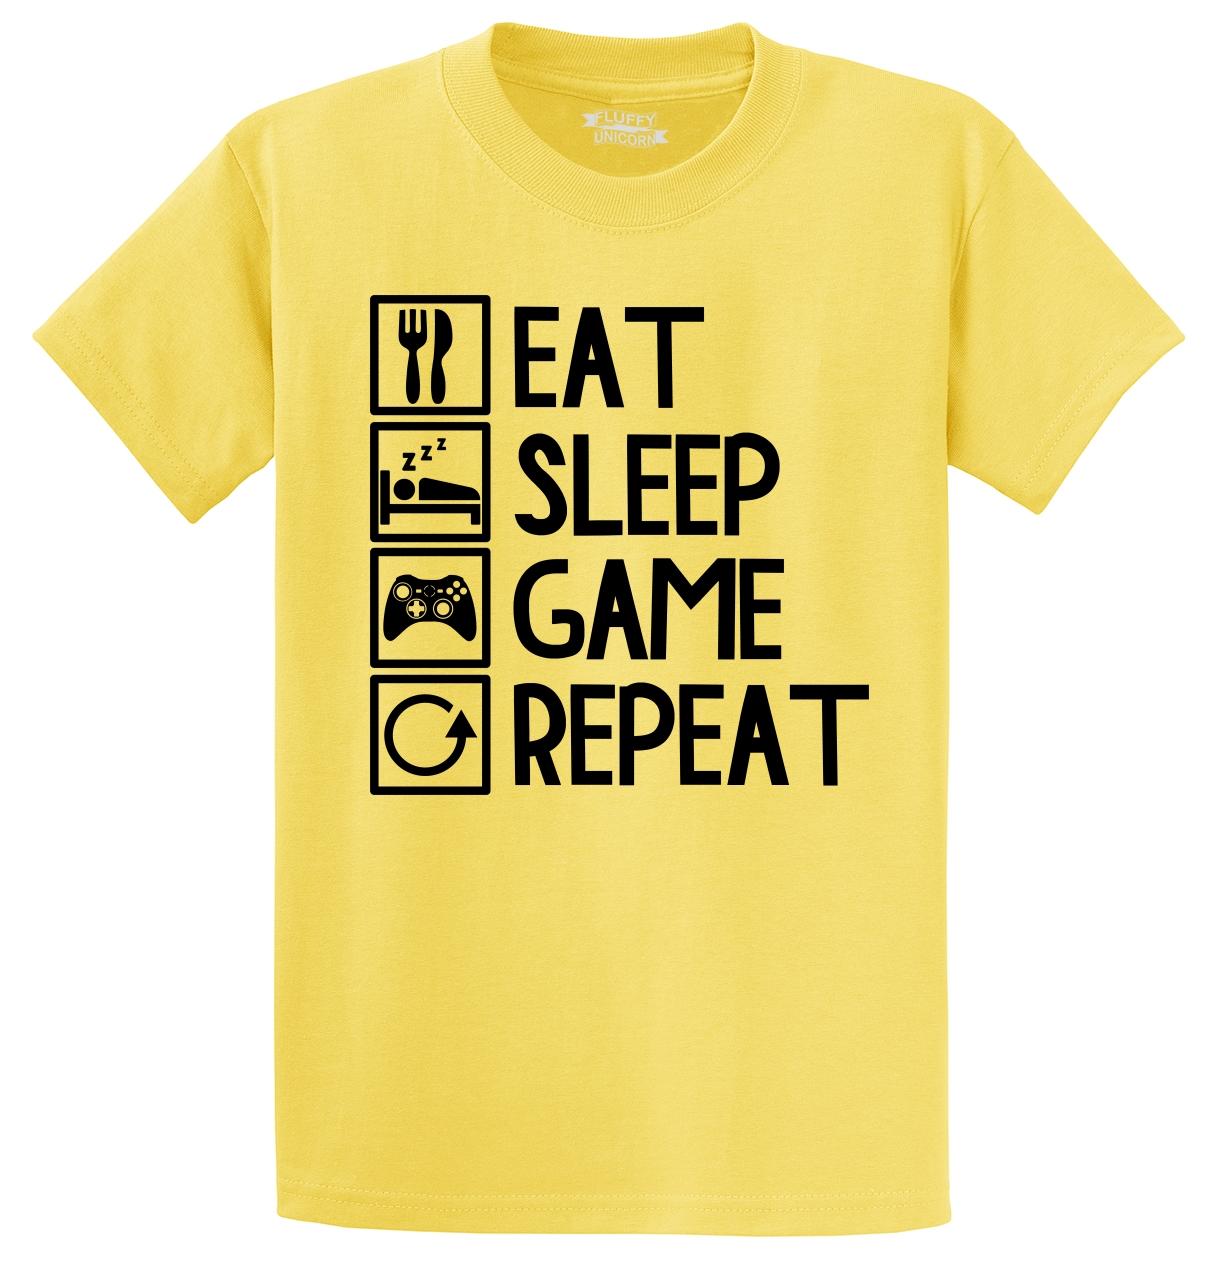 Eat Sleep Game Repeat Funny  Gamer Nerd Geek Gift Graphic Tee Shirt up to 5X 